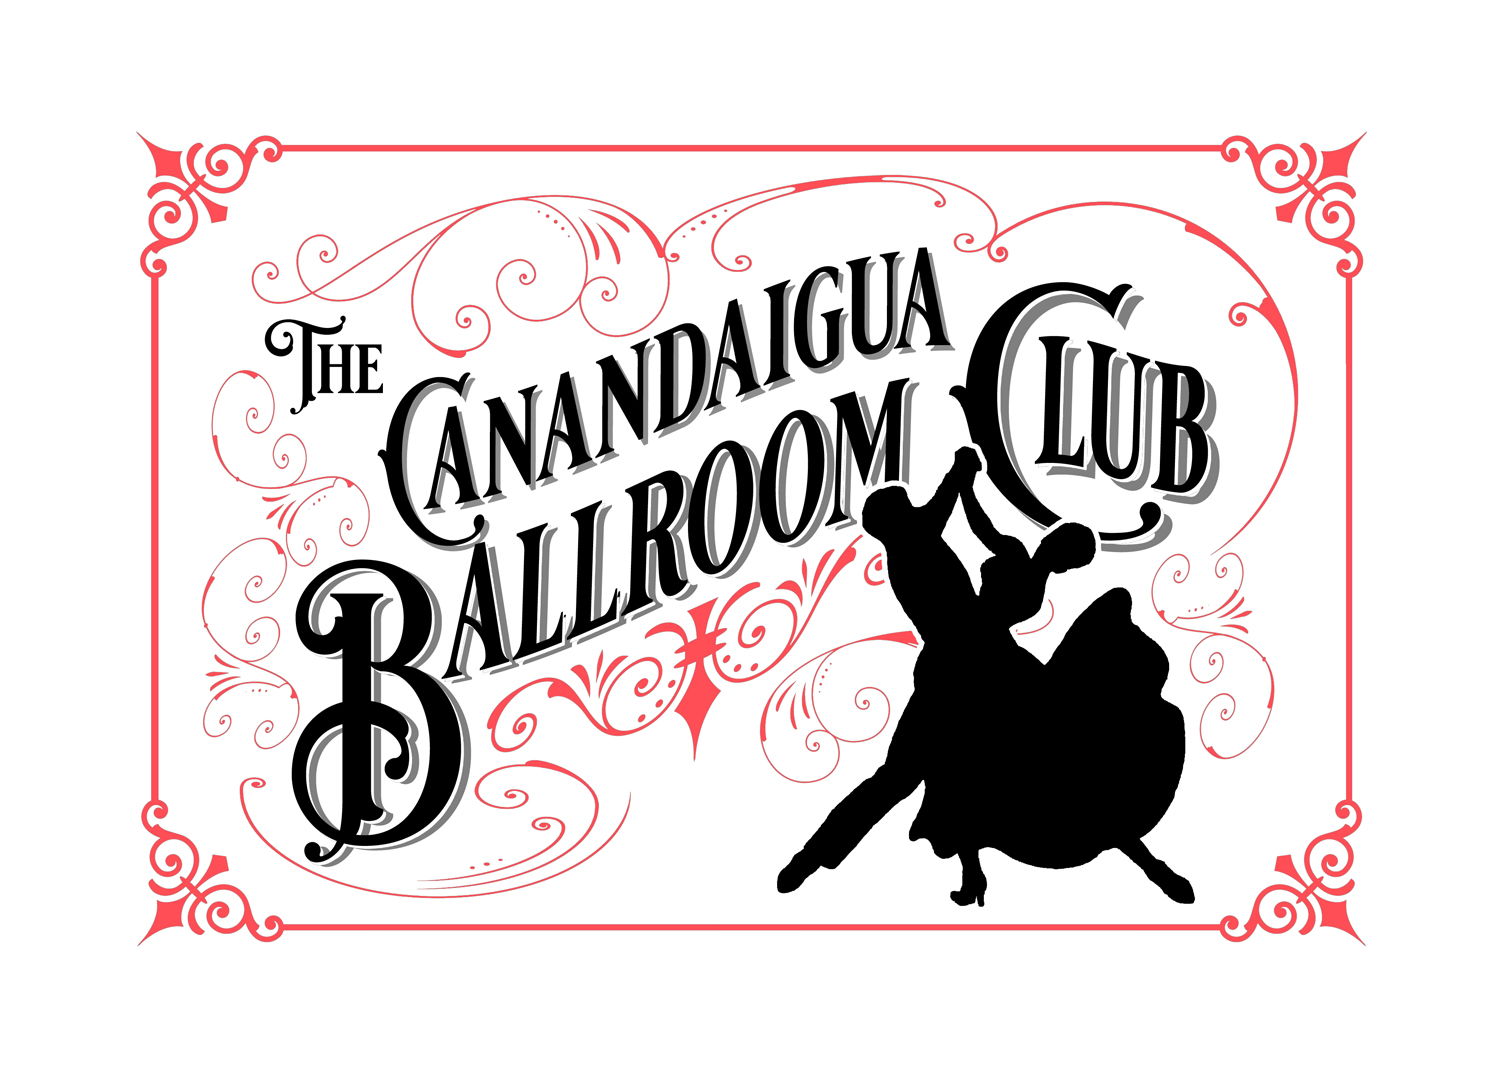 Canandaigua Ballroom Club